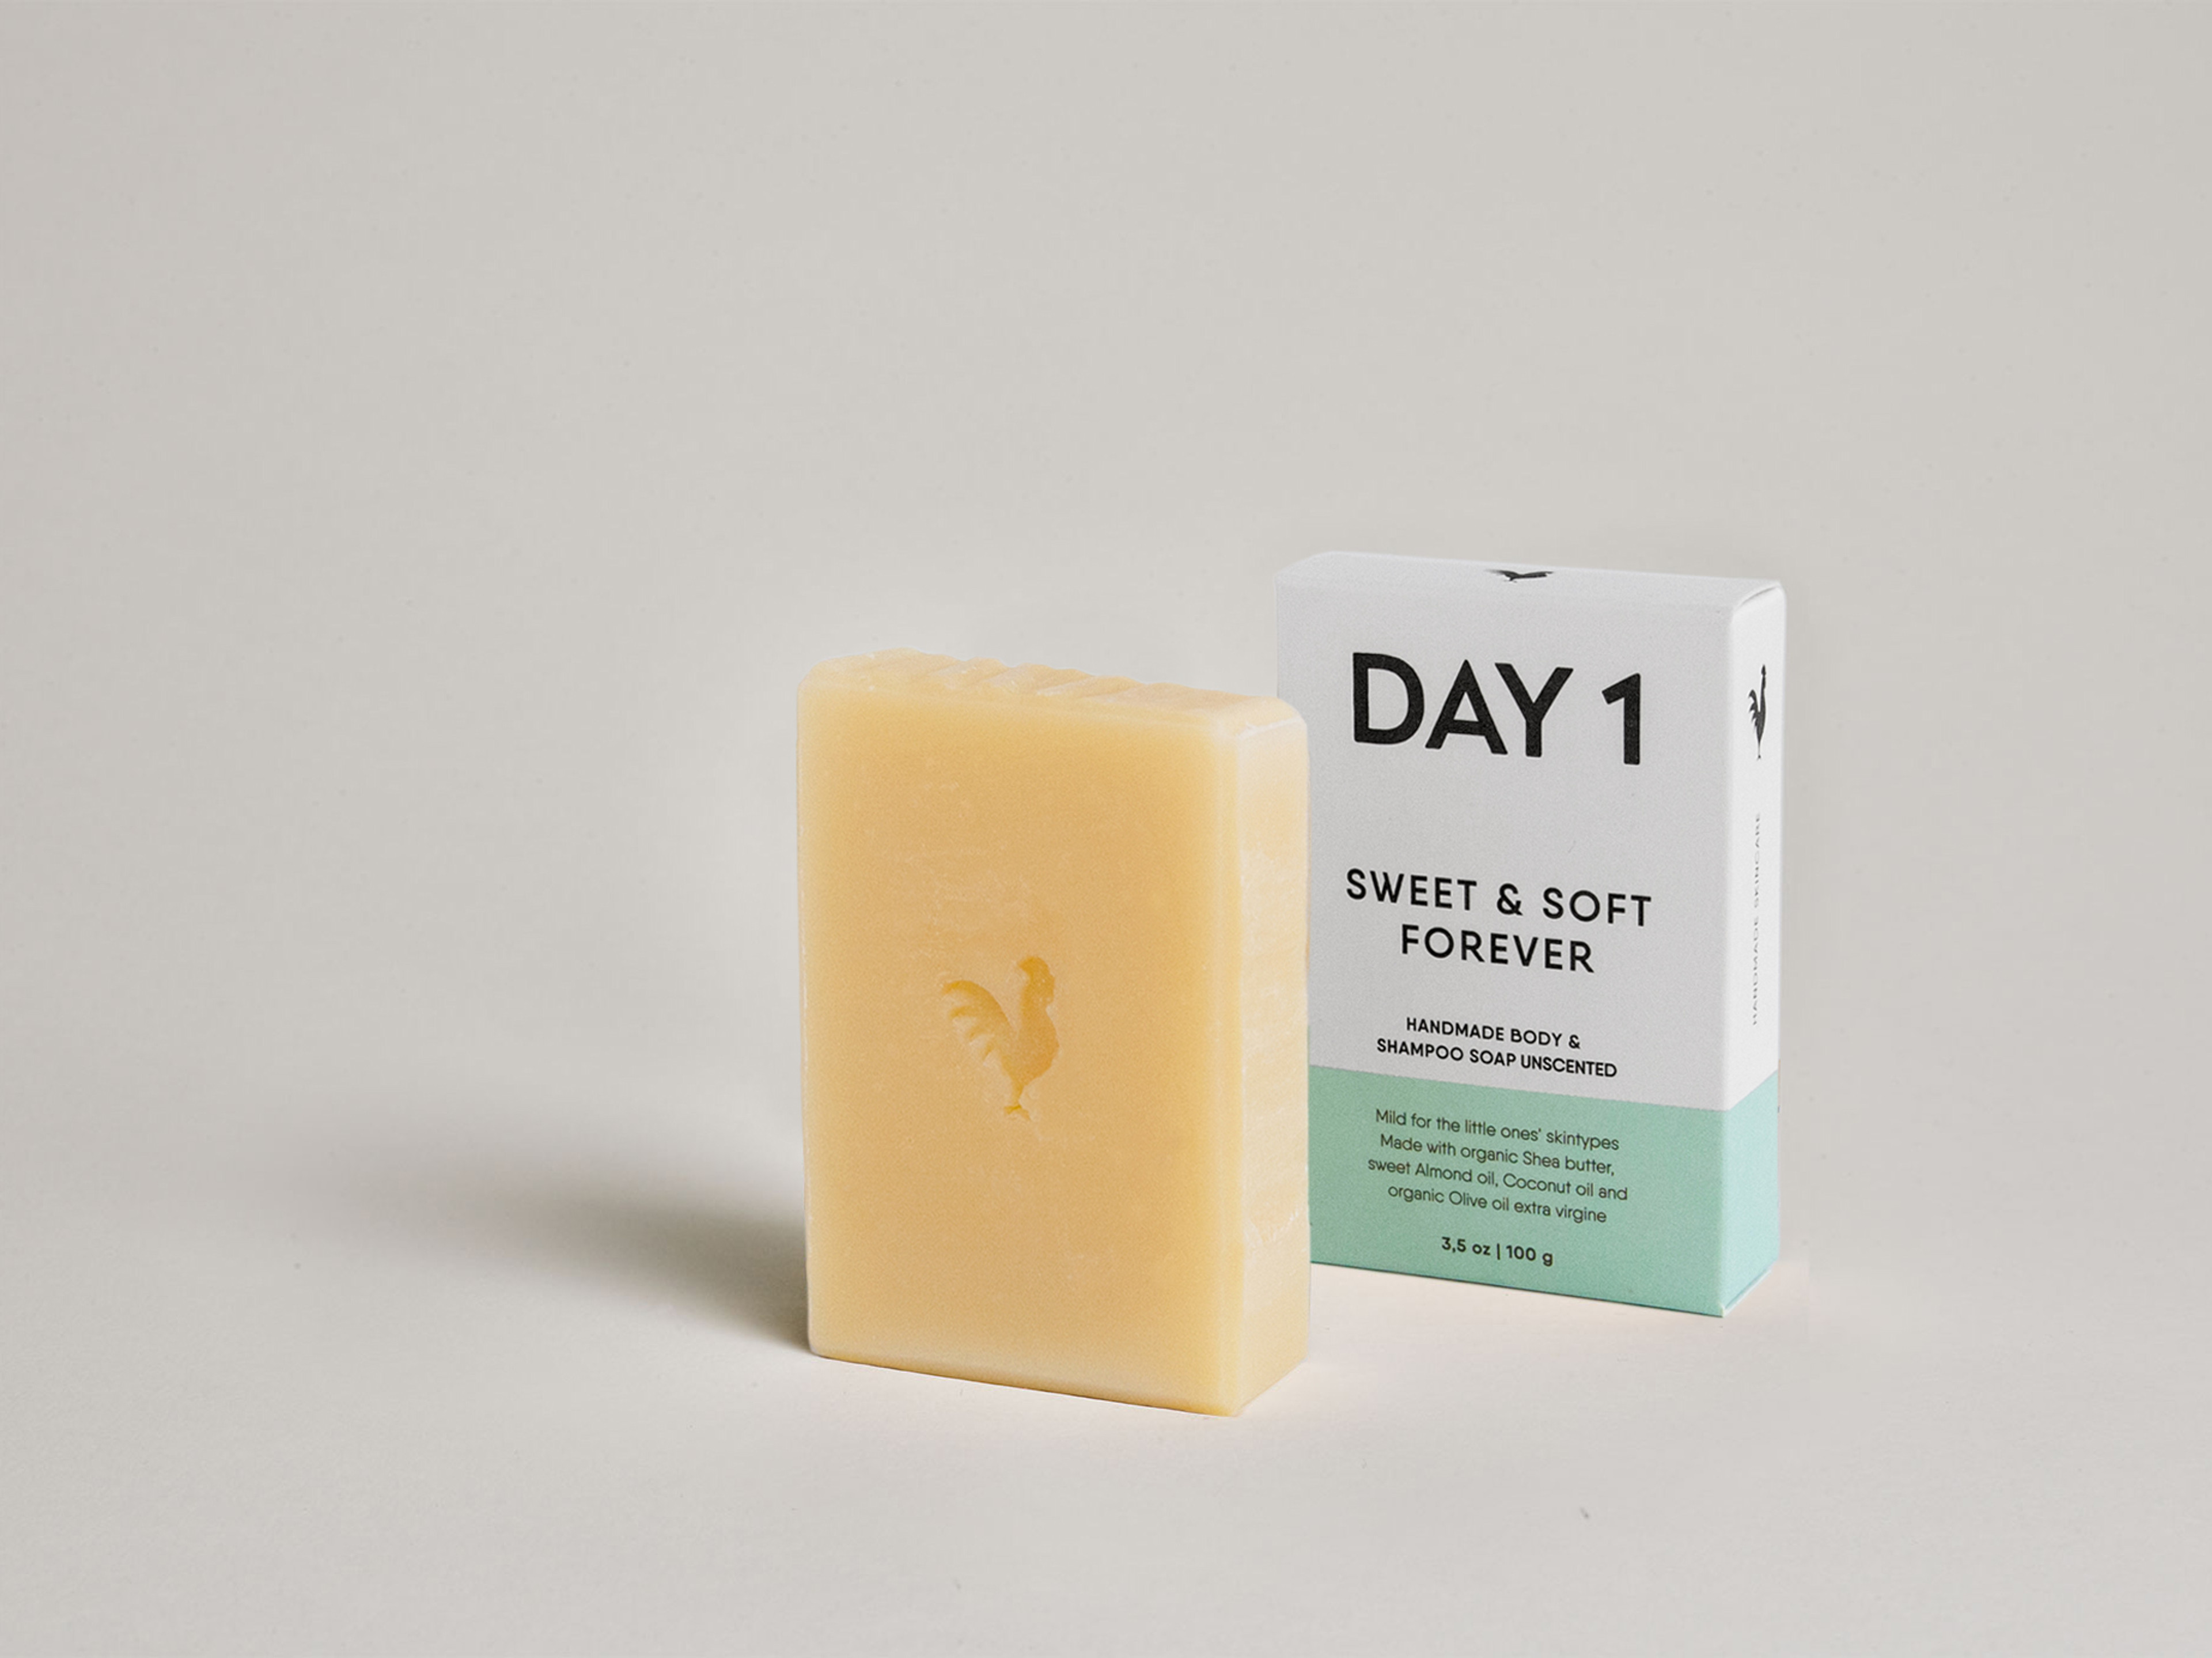 DAY 1 Baby Body & Shampoo Soap Bar - Sweet & Soft forever | No Nasties